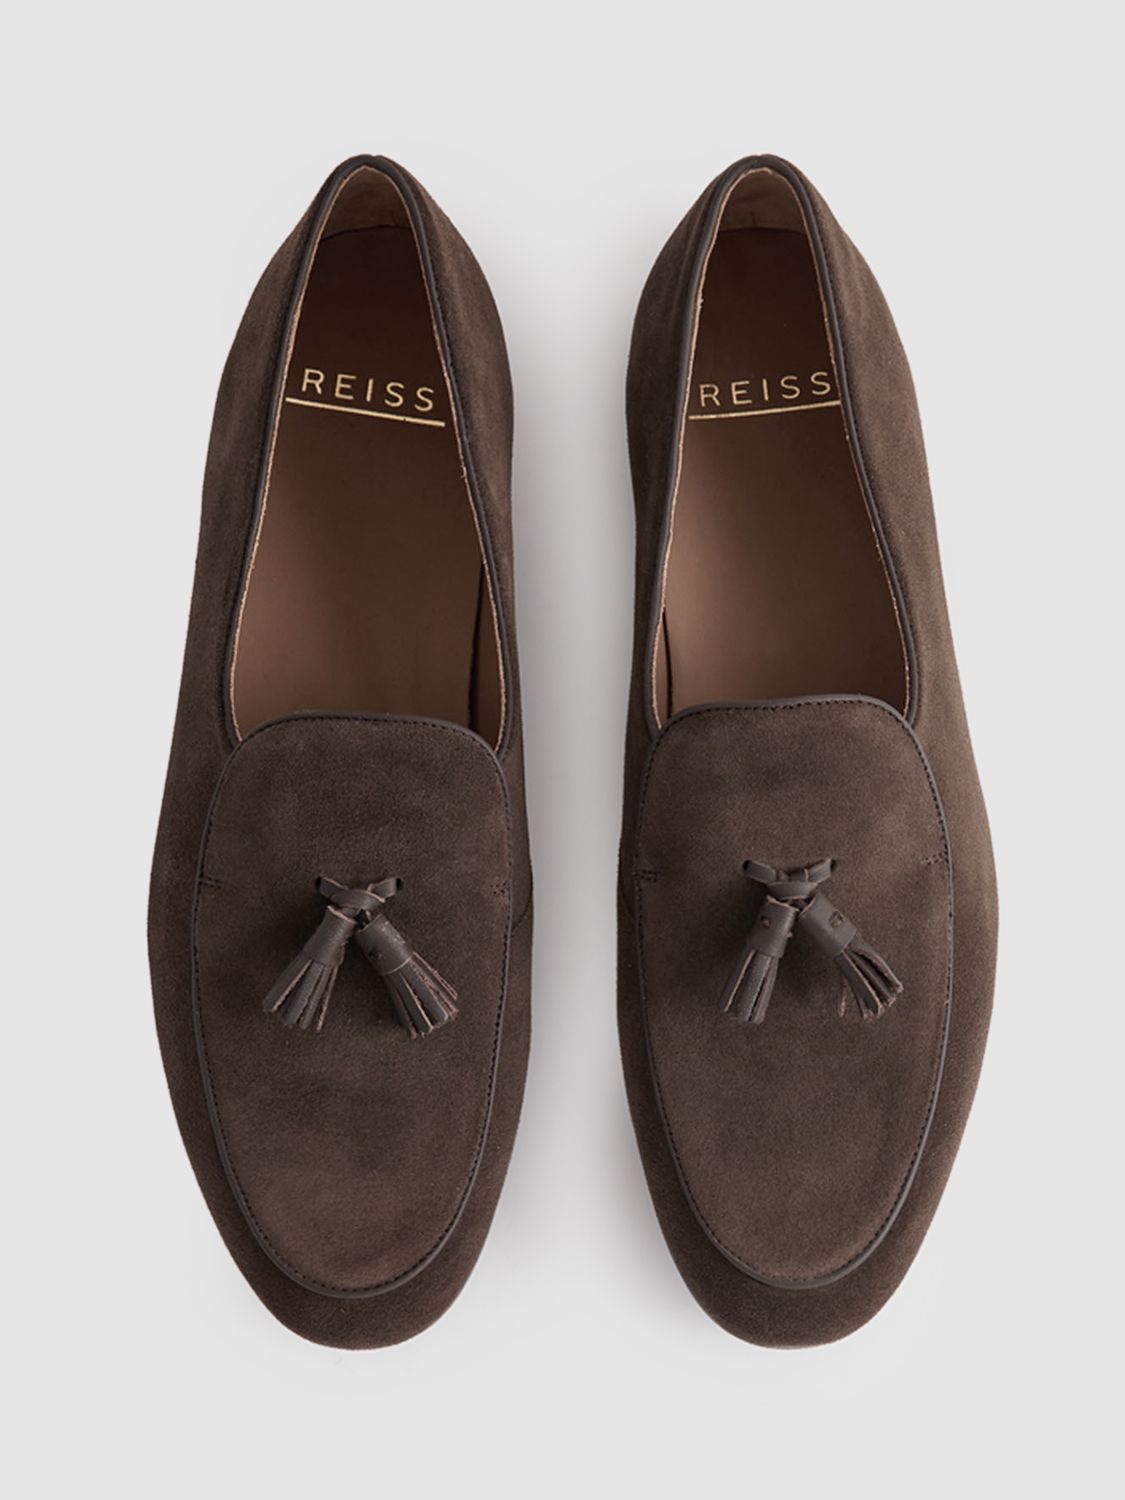 Reiss Harry Leather Tassel Loafers, Dark Brown, 7